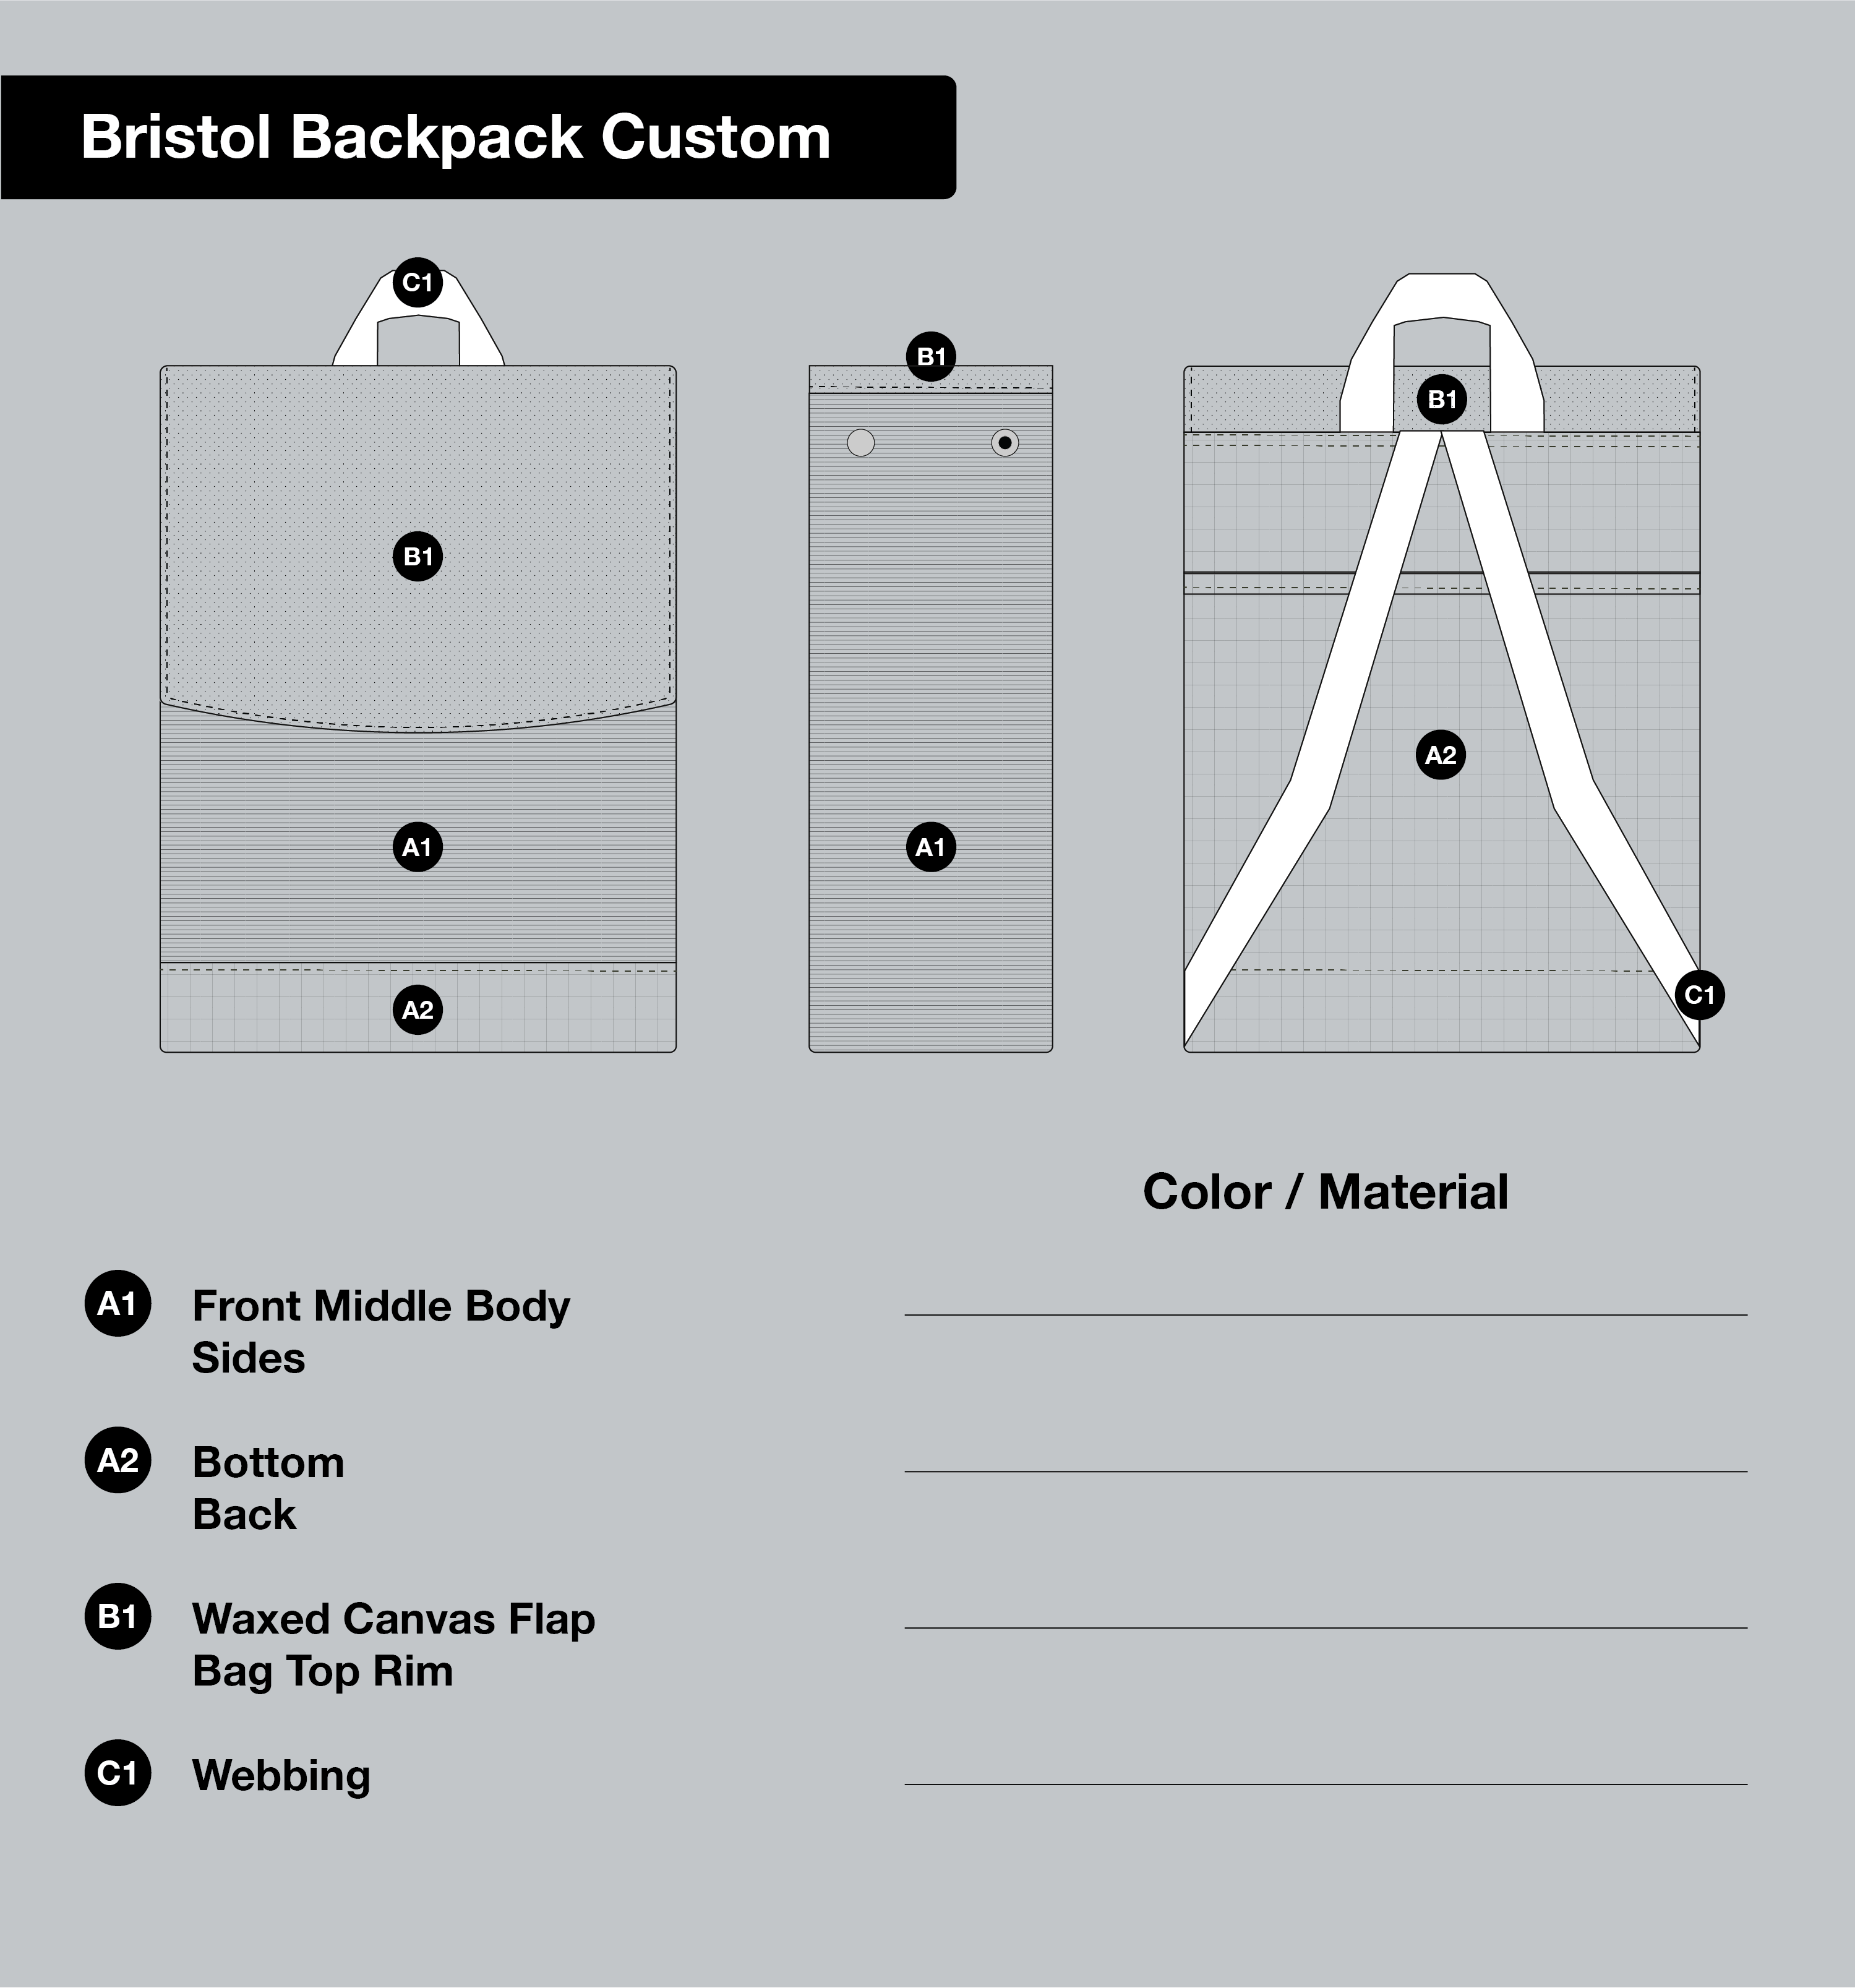 Bristol Backpack Custom